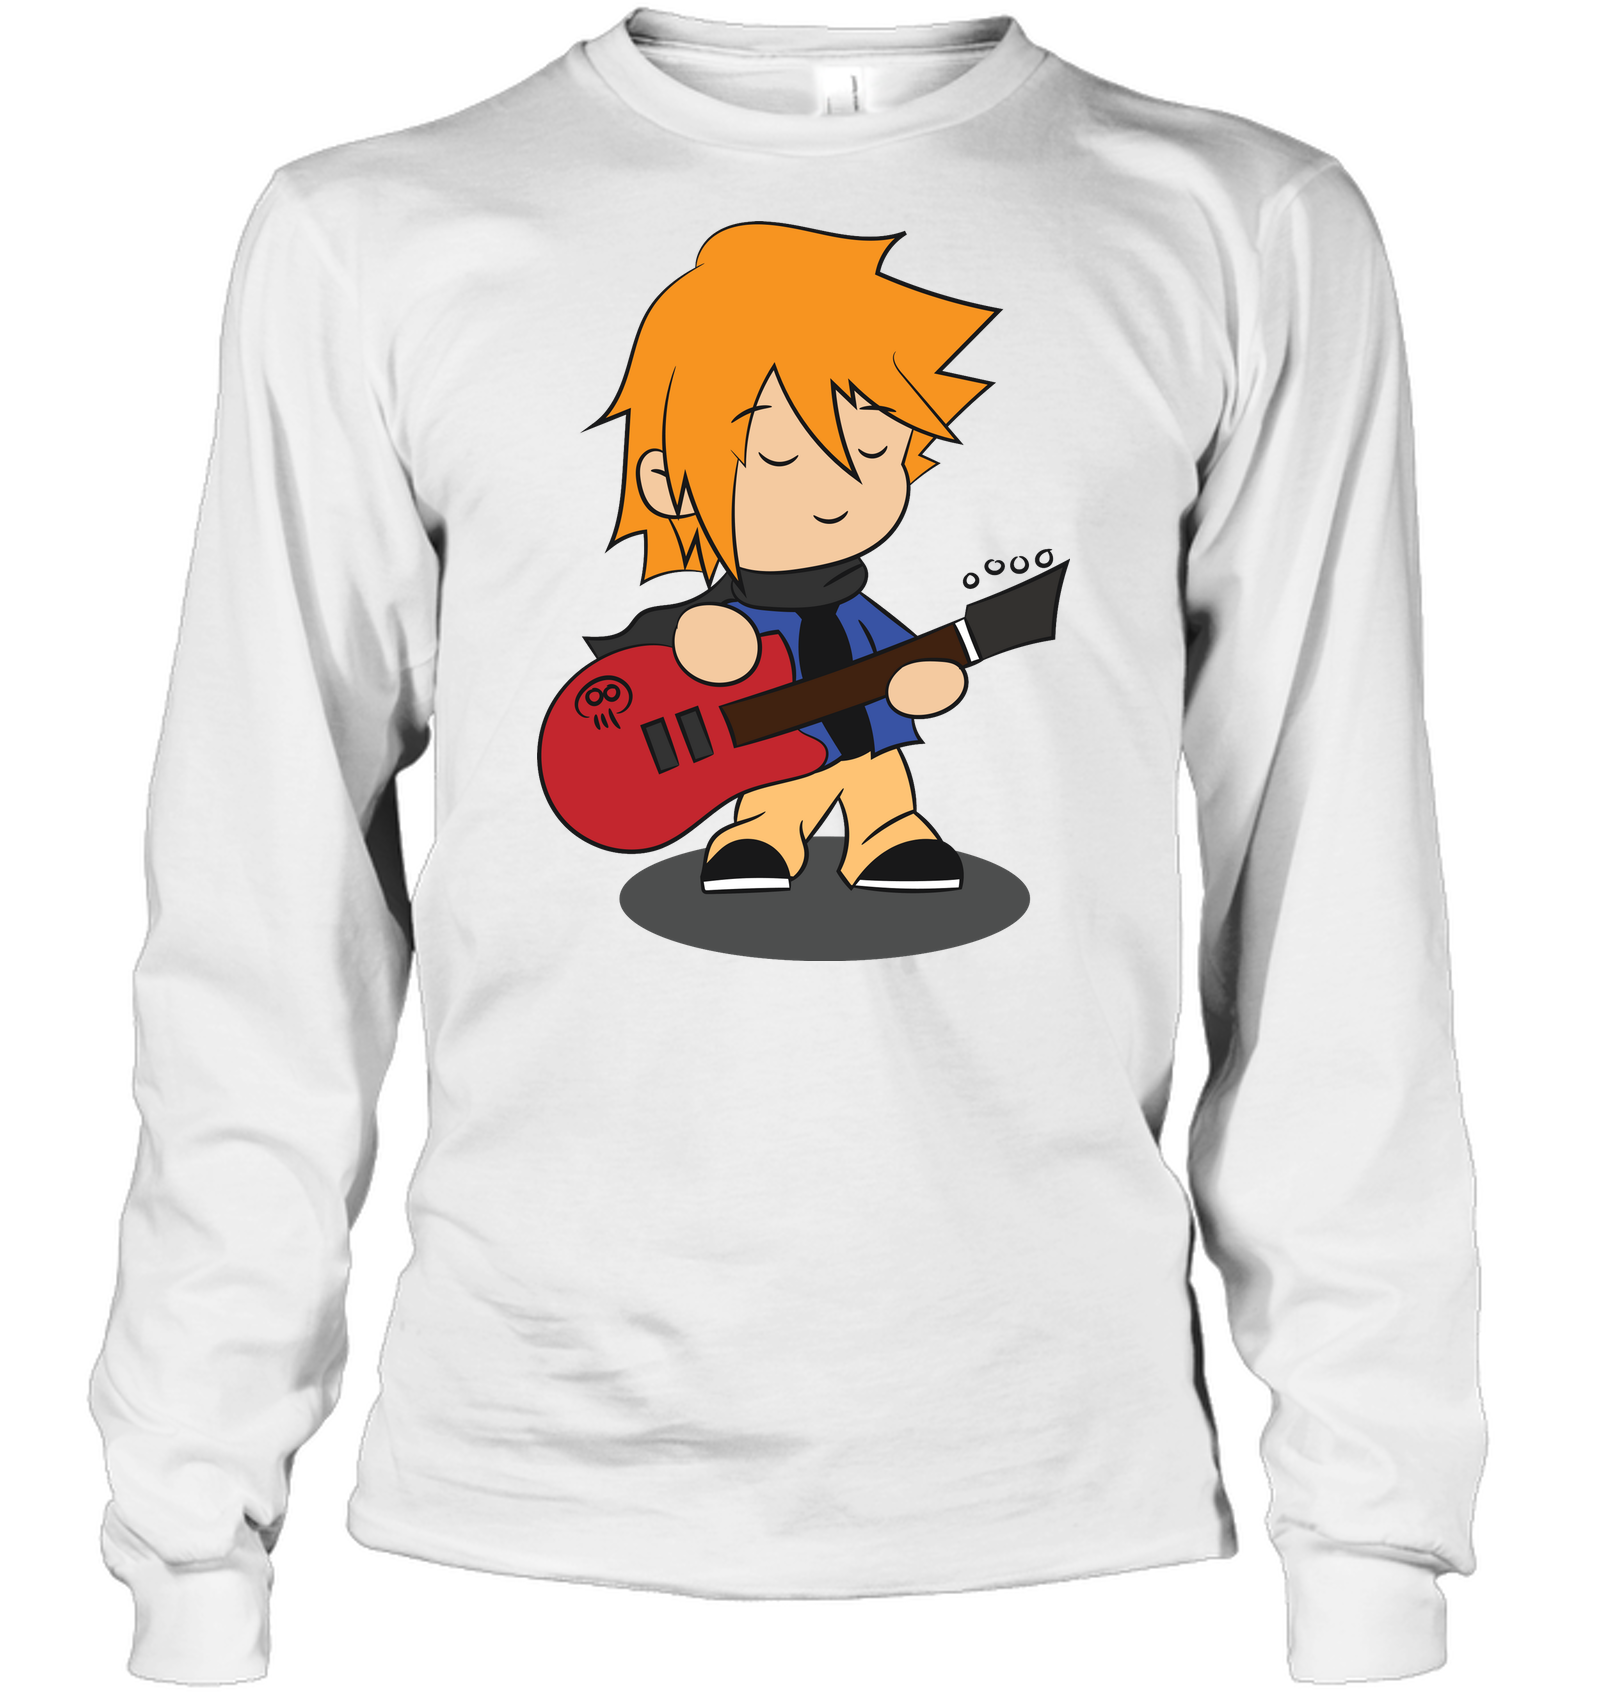 Boy with Guitar - Gildan Adult Classic Long Sleeve T-Shirt